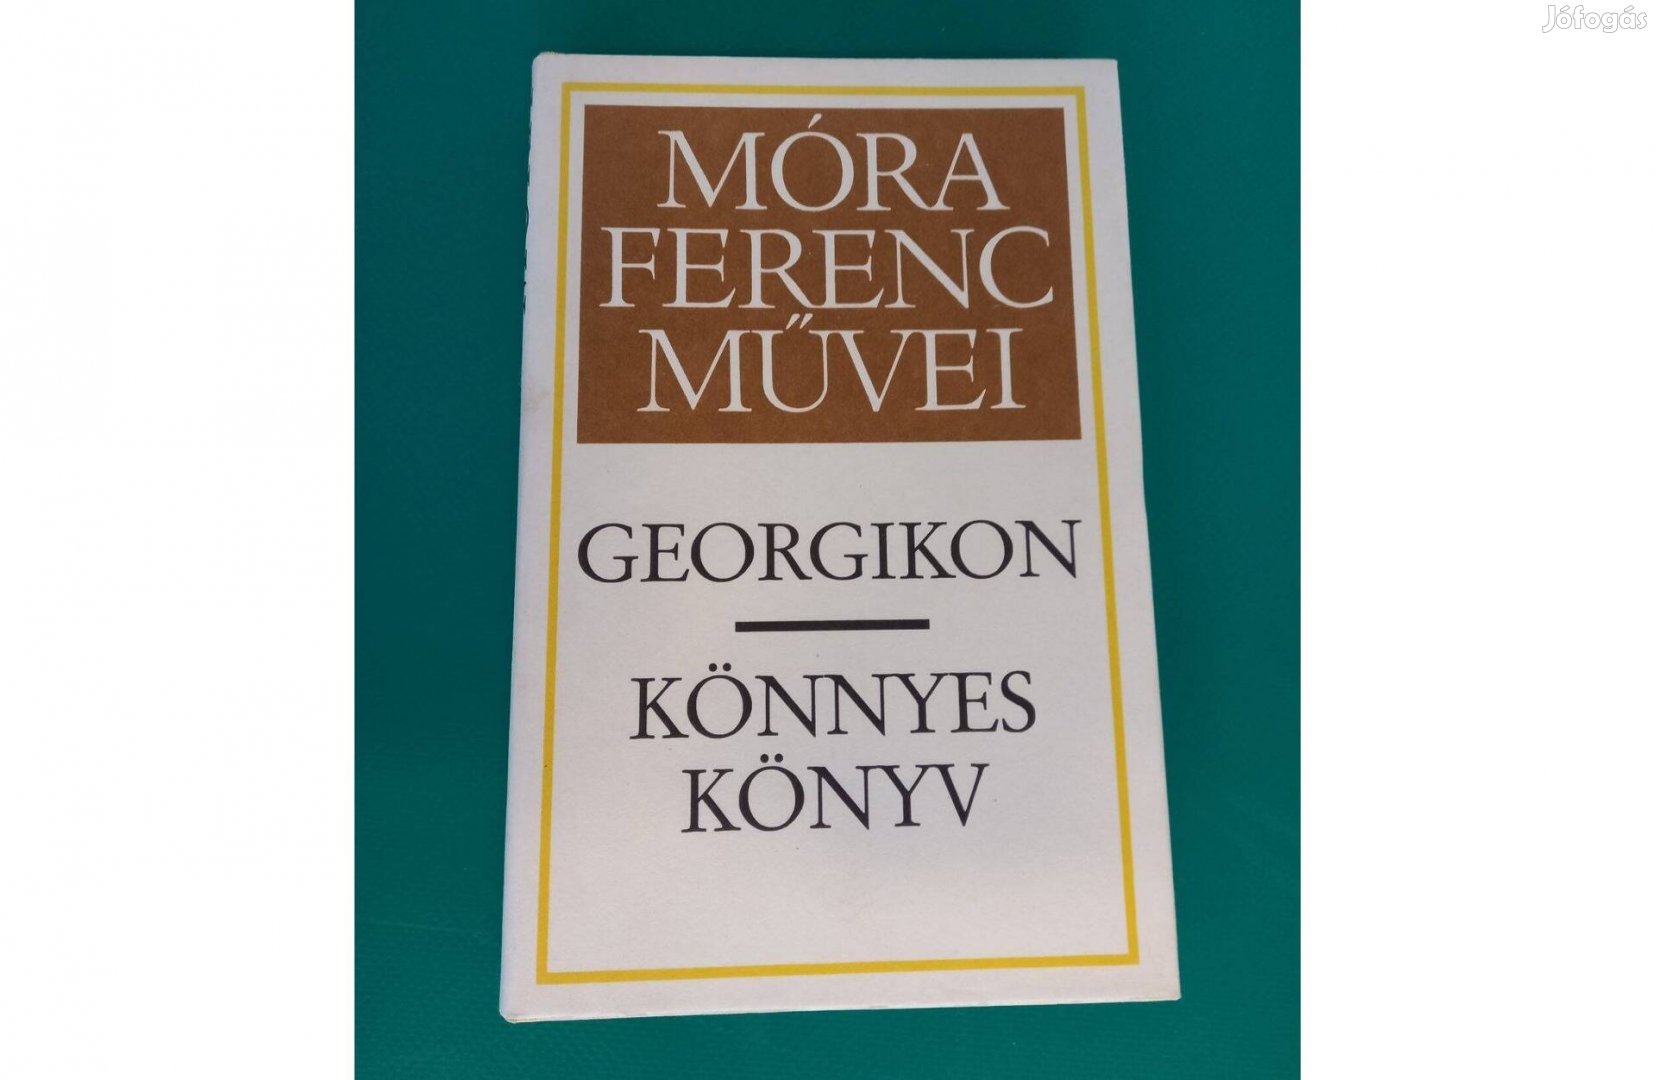 Móra Ferenc: Georgikon / Könnyes könyv